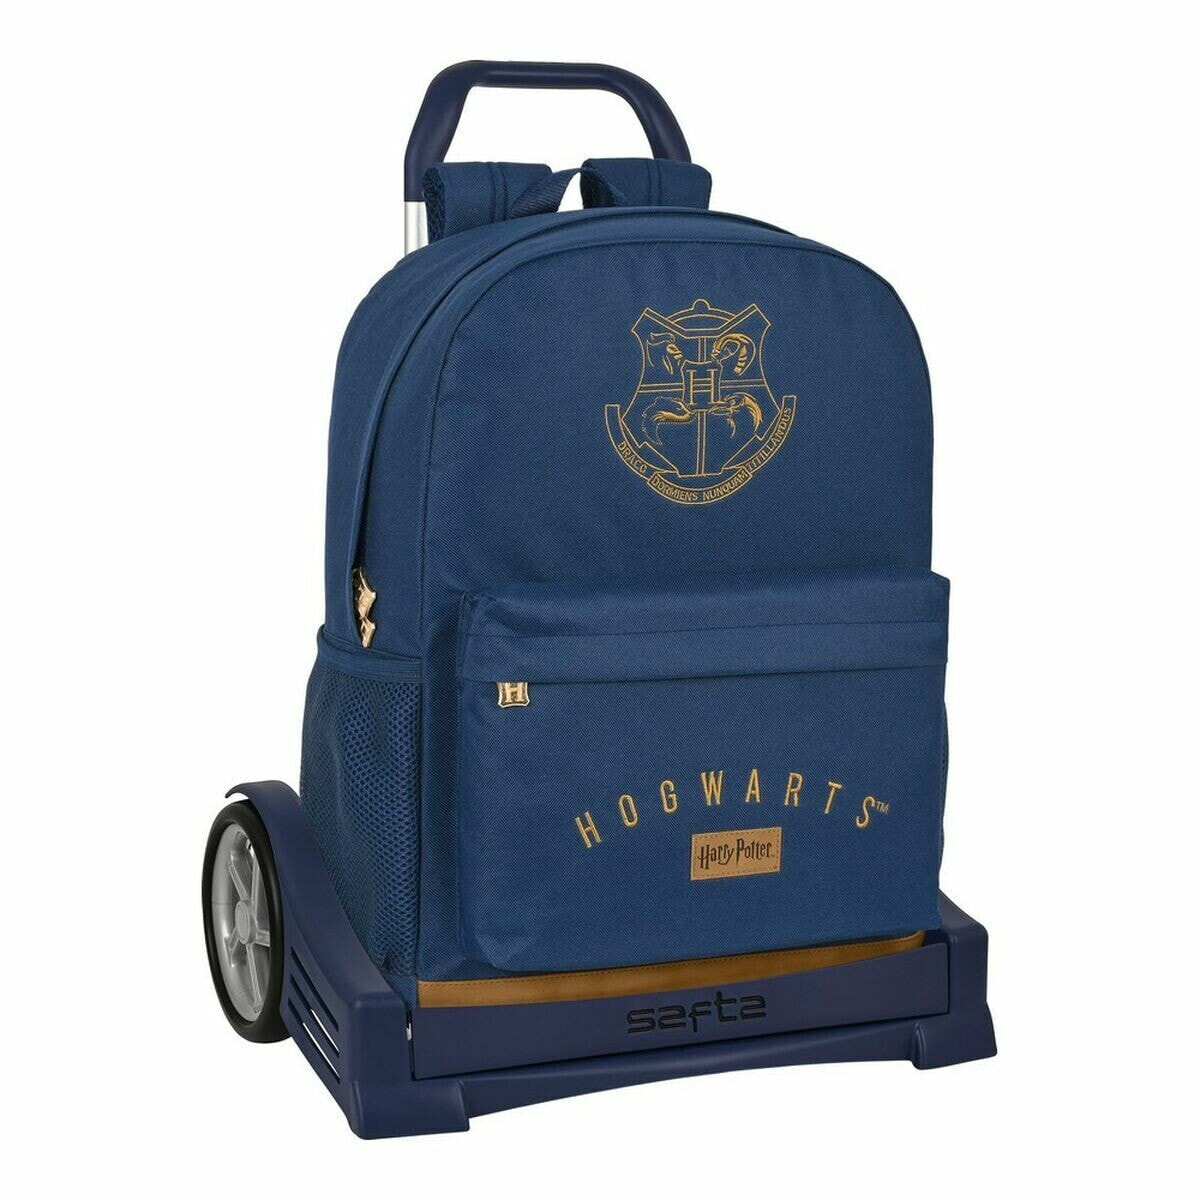 School Rucksack with Wheels Safta Navy Blue Harry Potter 32 x 14 x 43 cm